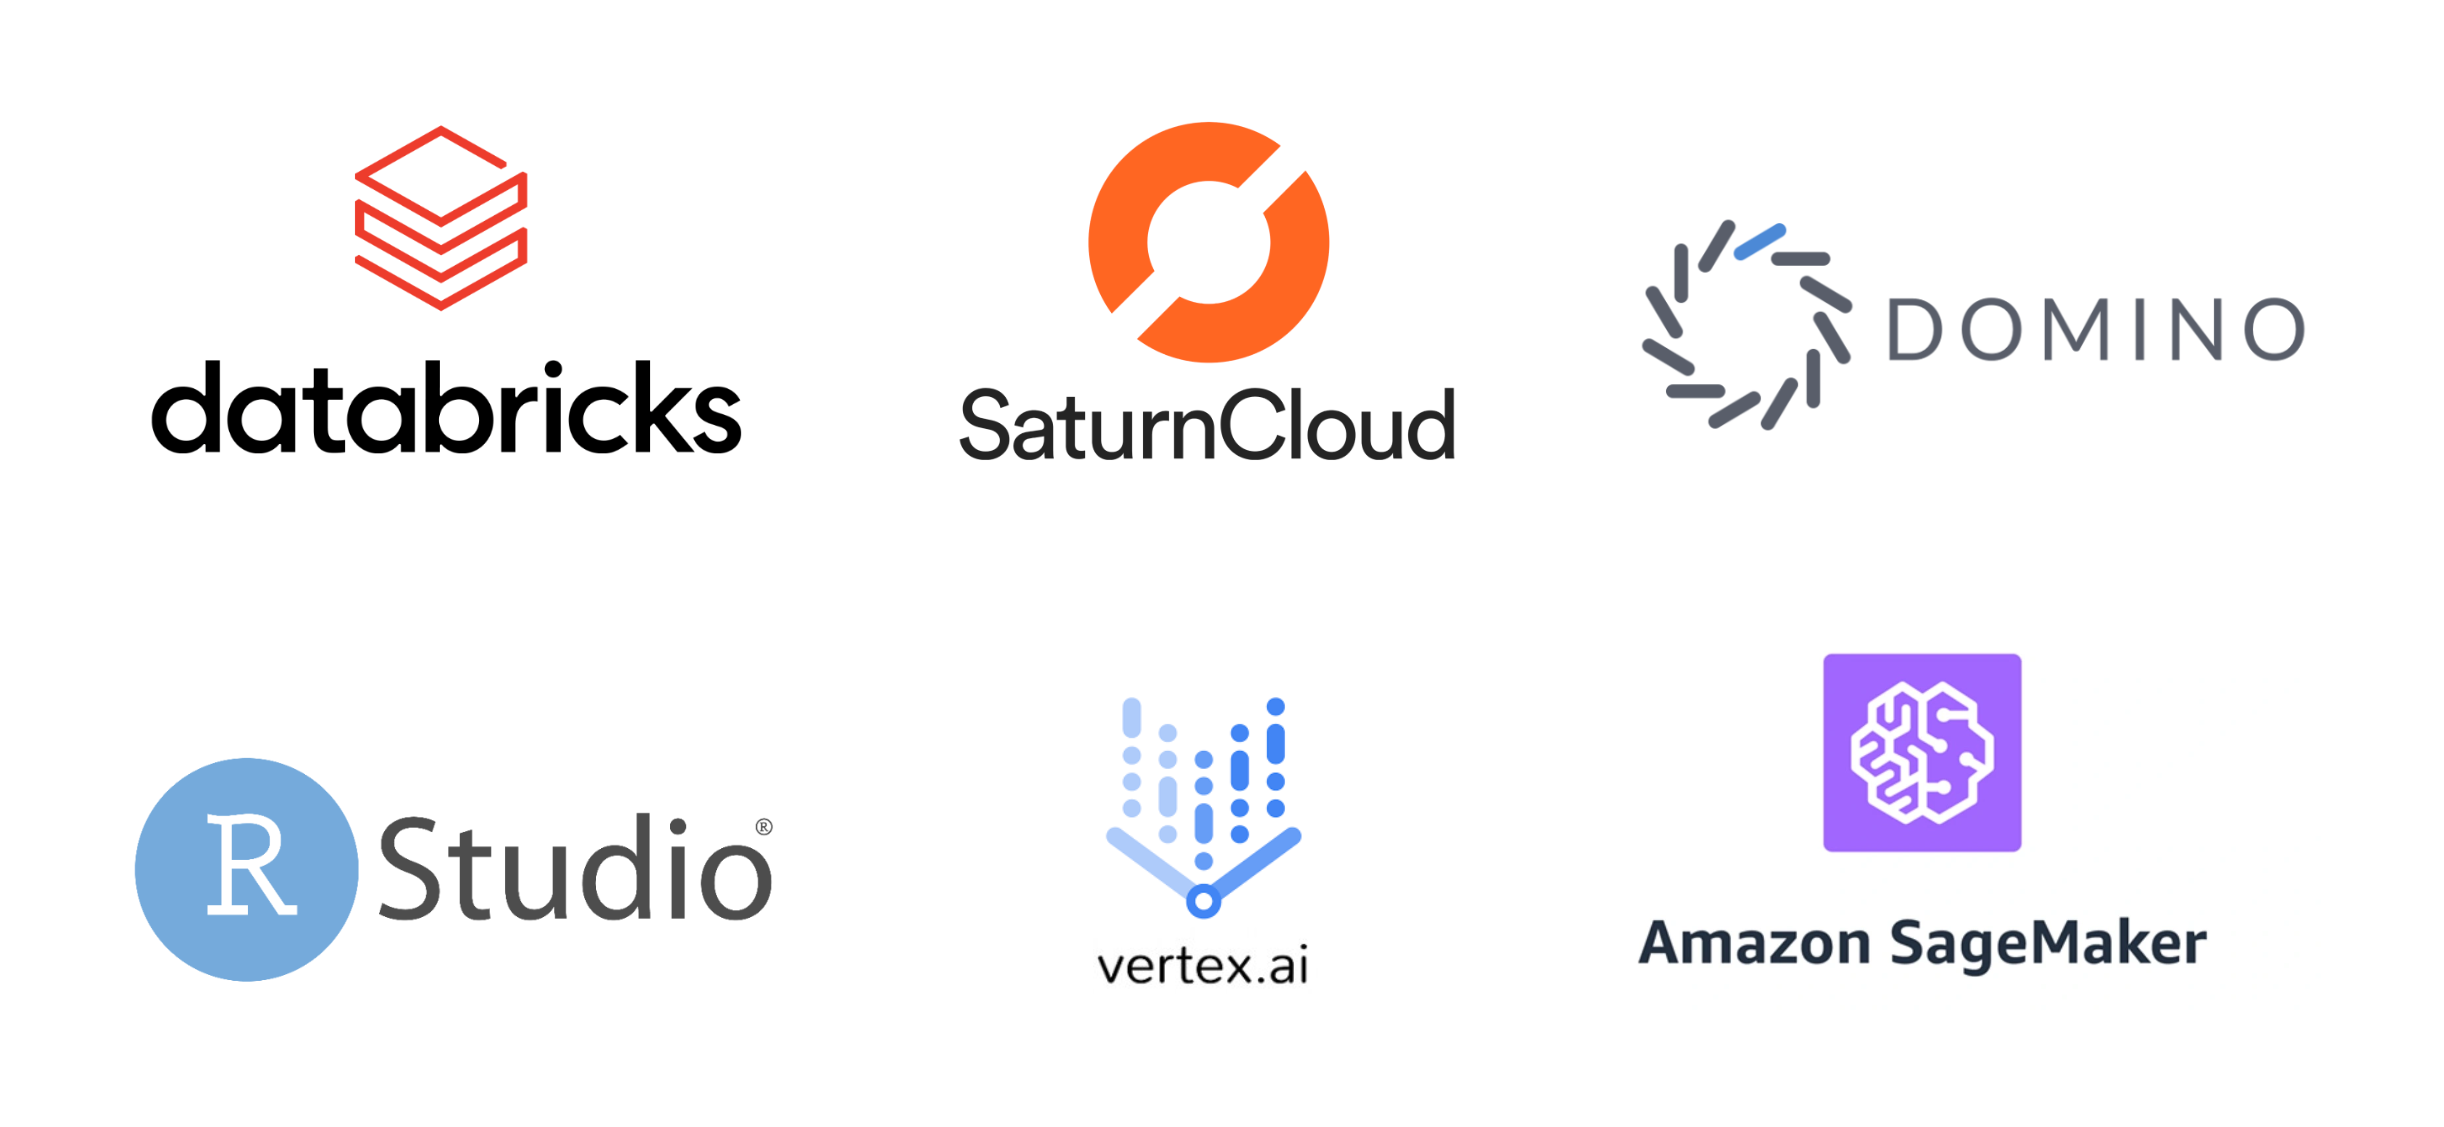 Databricks, Domino Data Lab, Saturn Cloud, RStudio, SageMaker, and Vertex.ai logos.